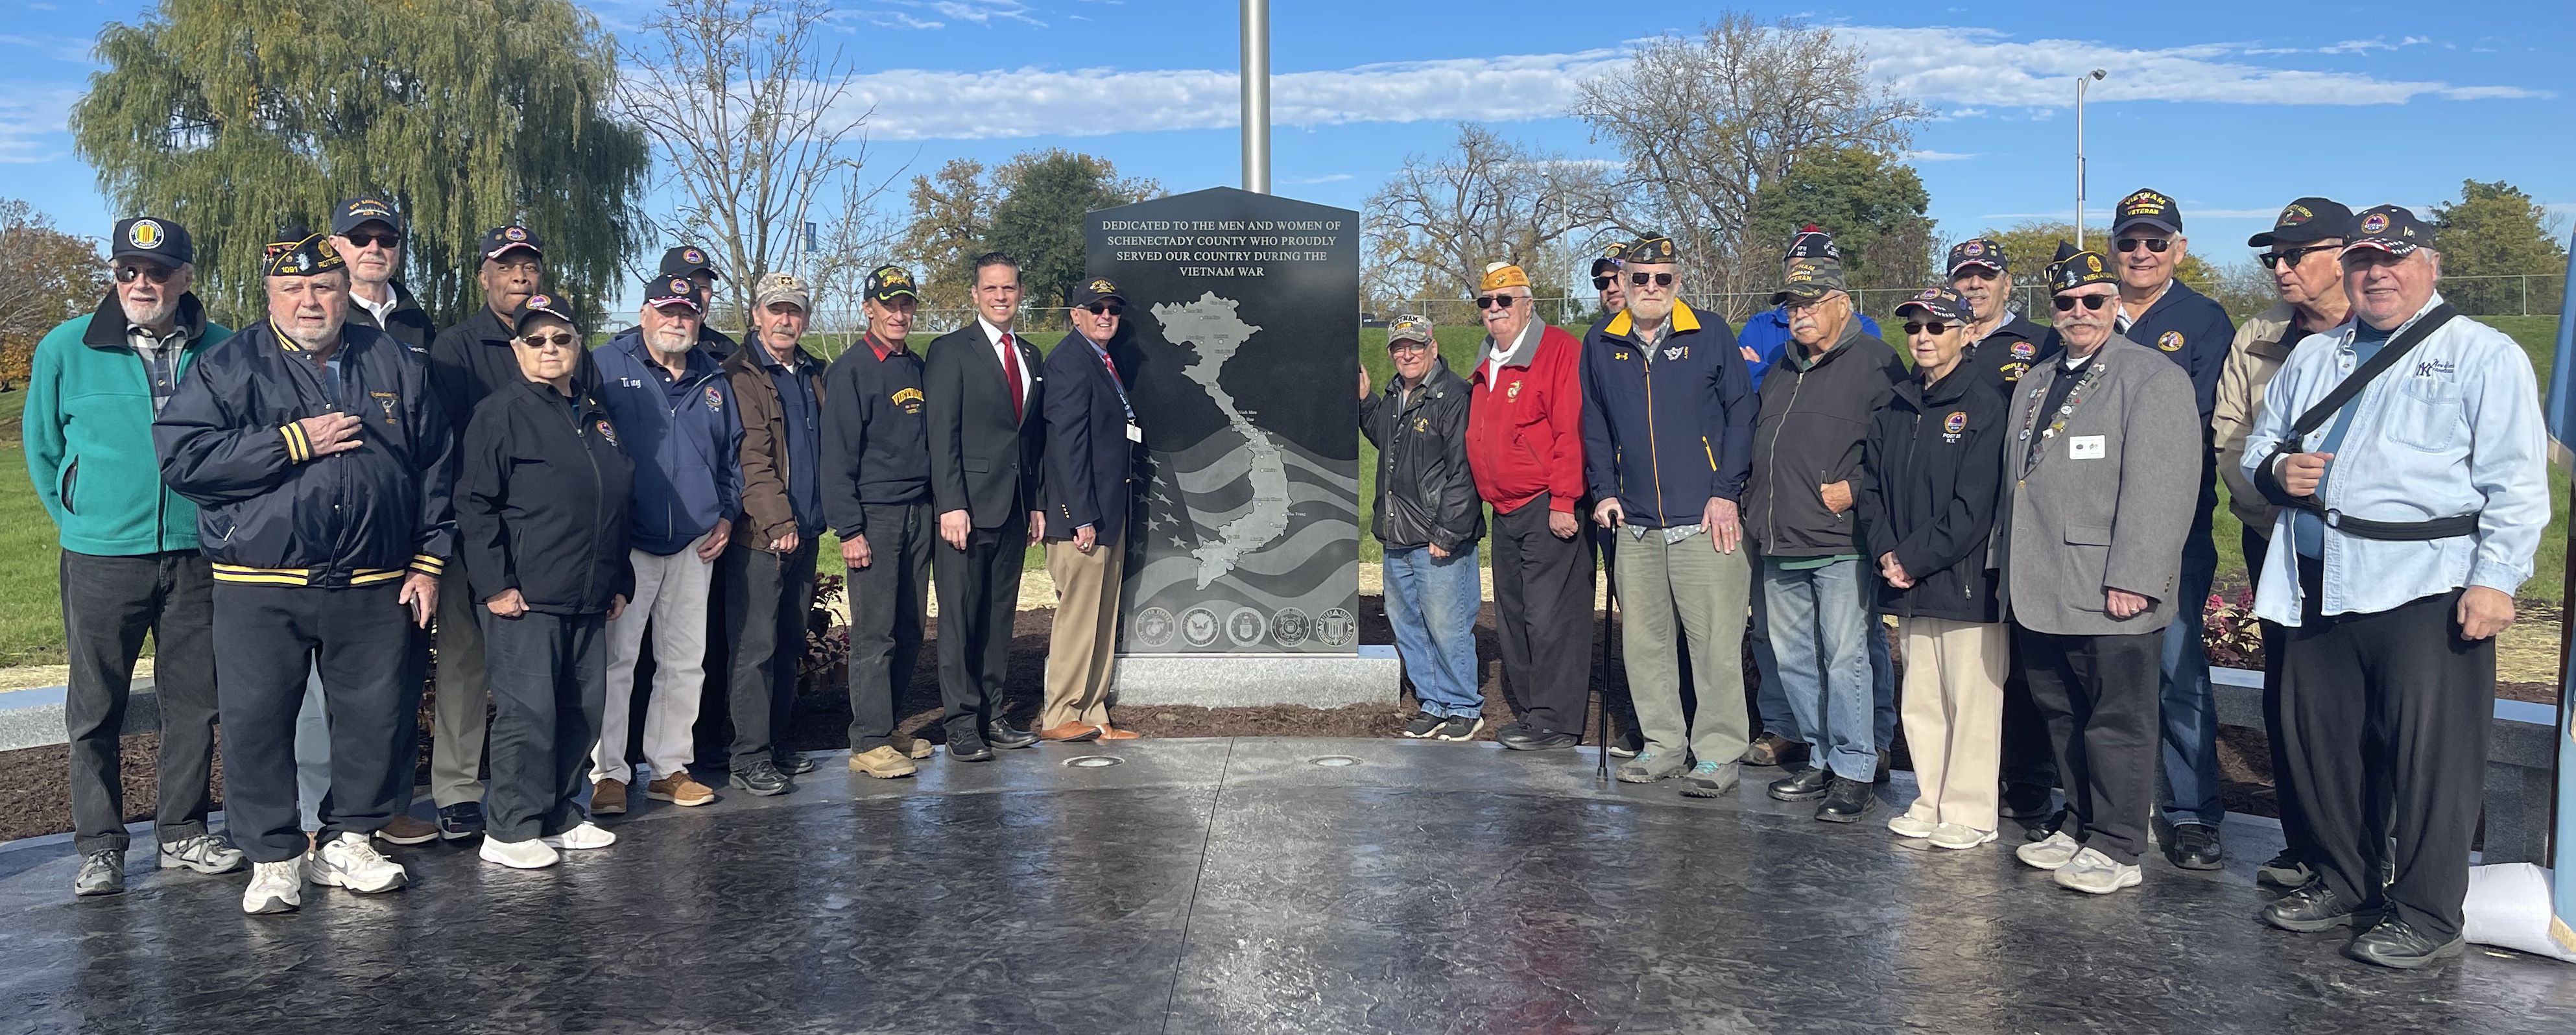 Schenectady County Vietnam Veterans Memorial Park